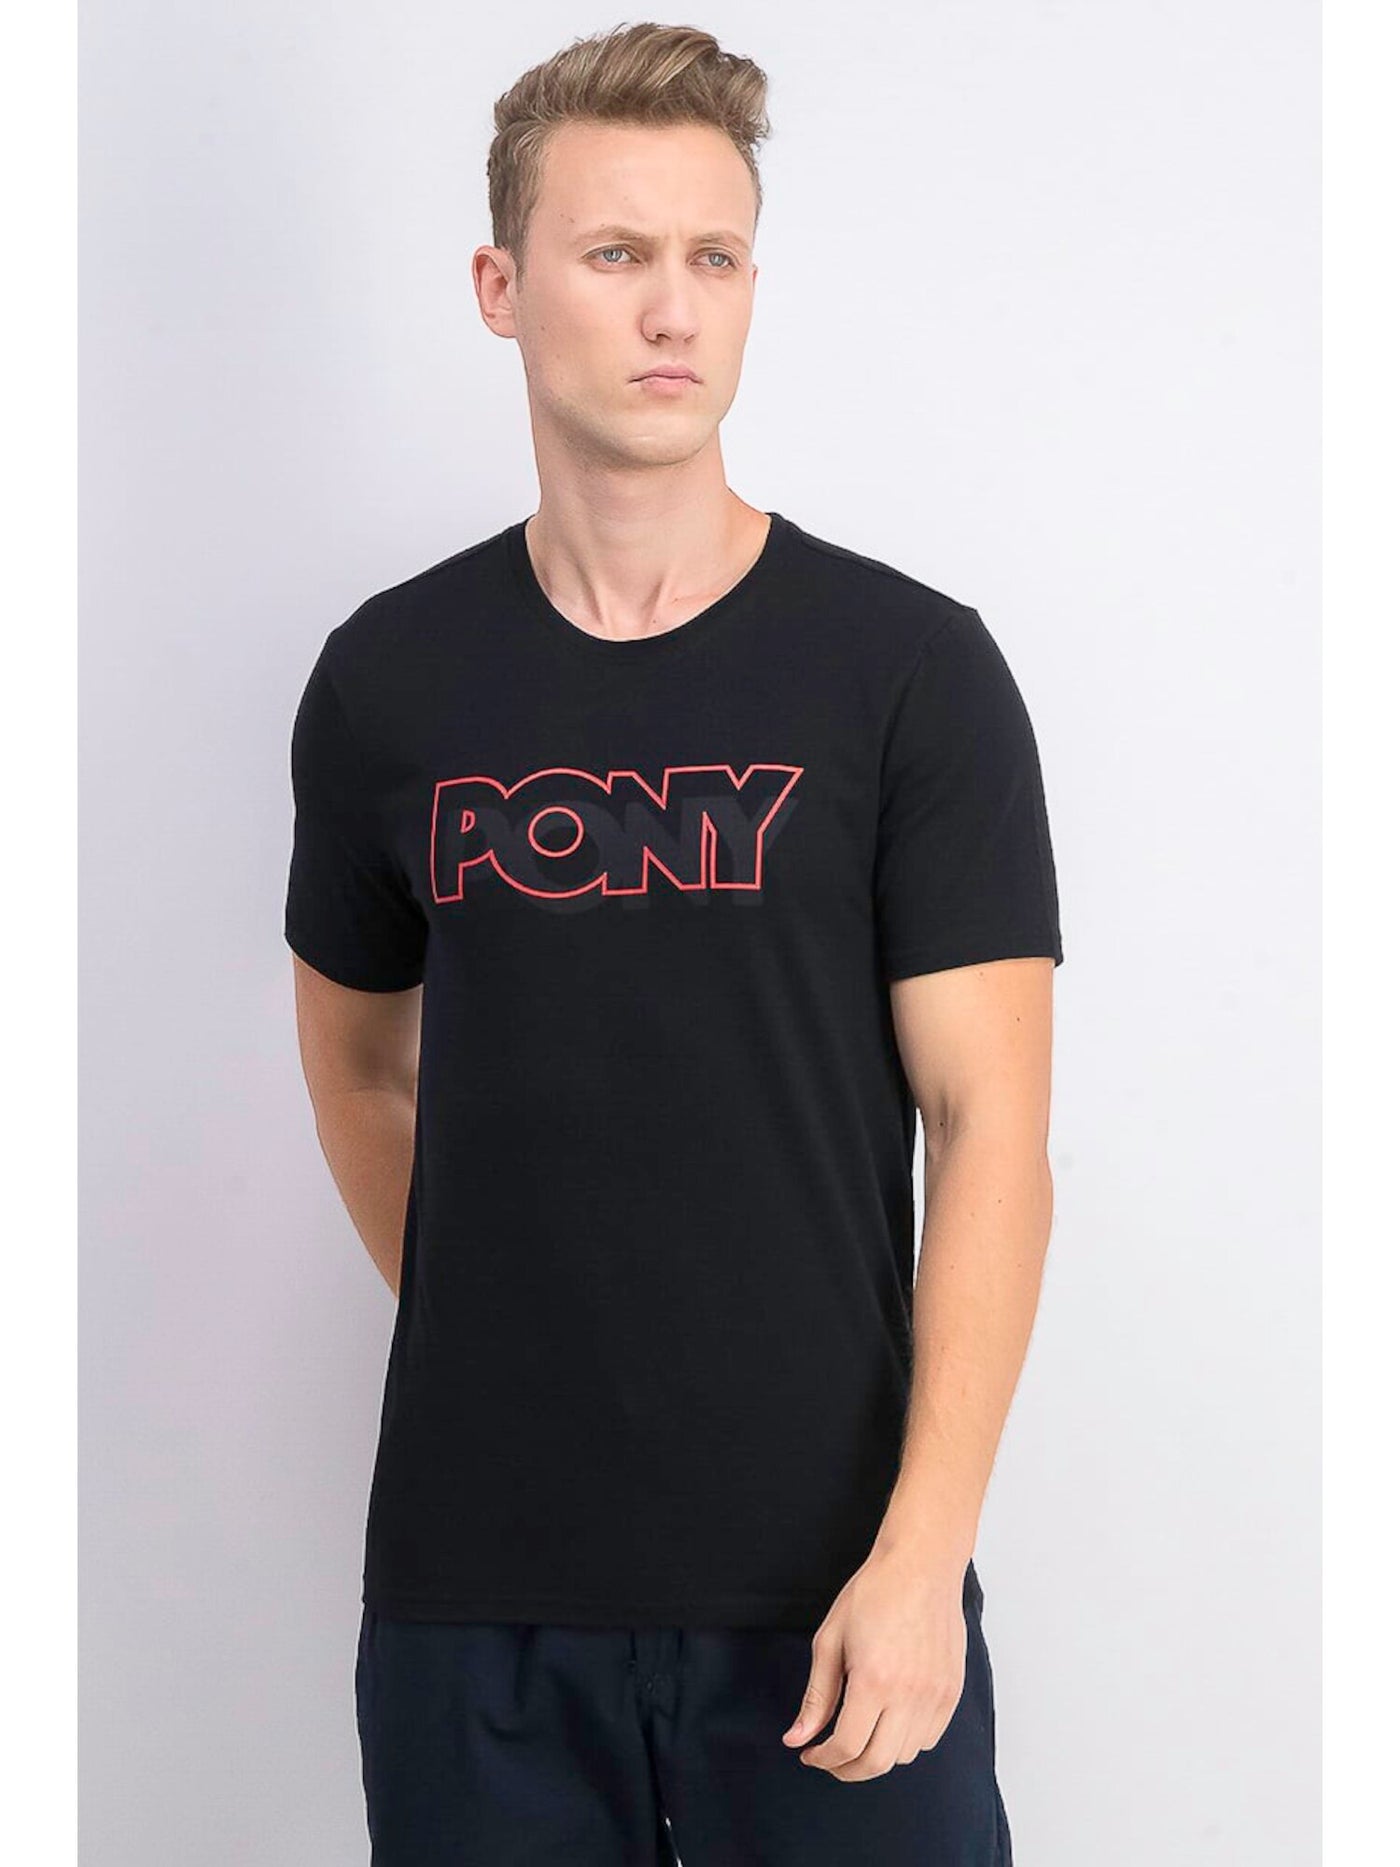 PONY Mens Black Logo Graphic Short Sleeve Stretch T-Shirt S